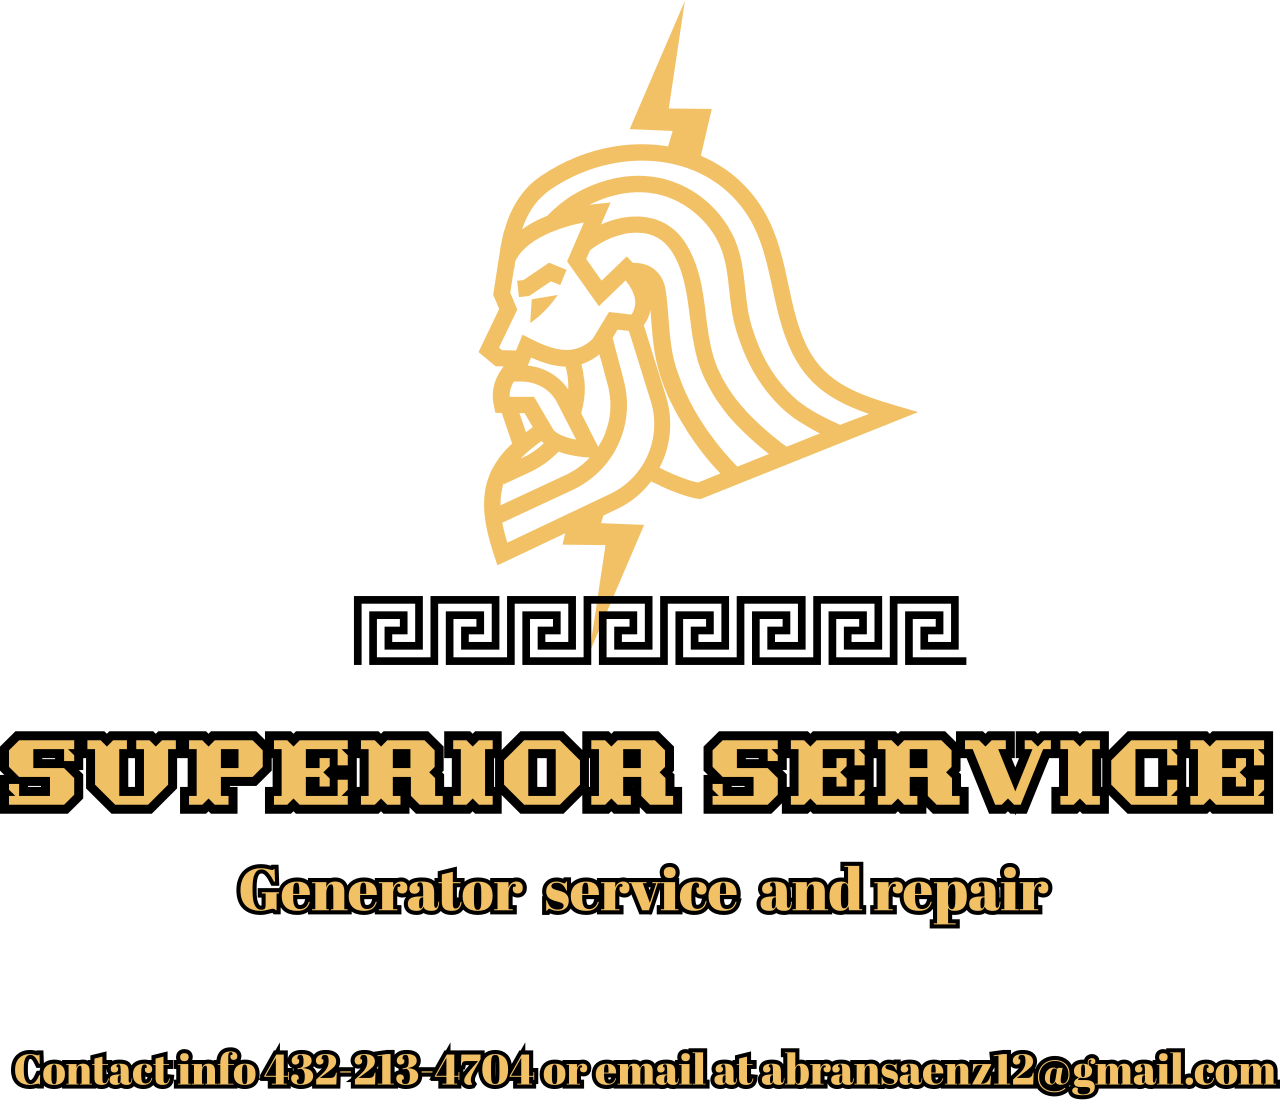 Superior service 's web page